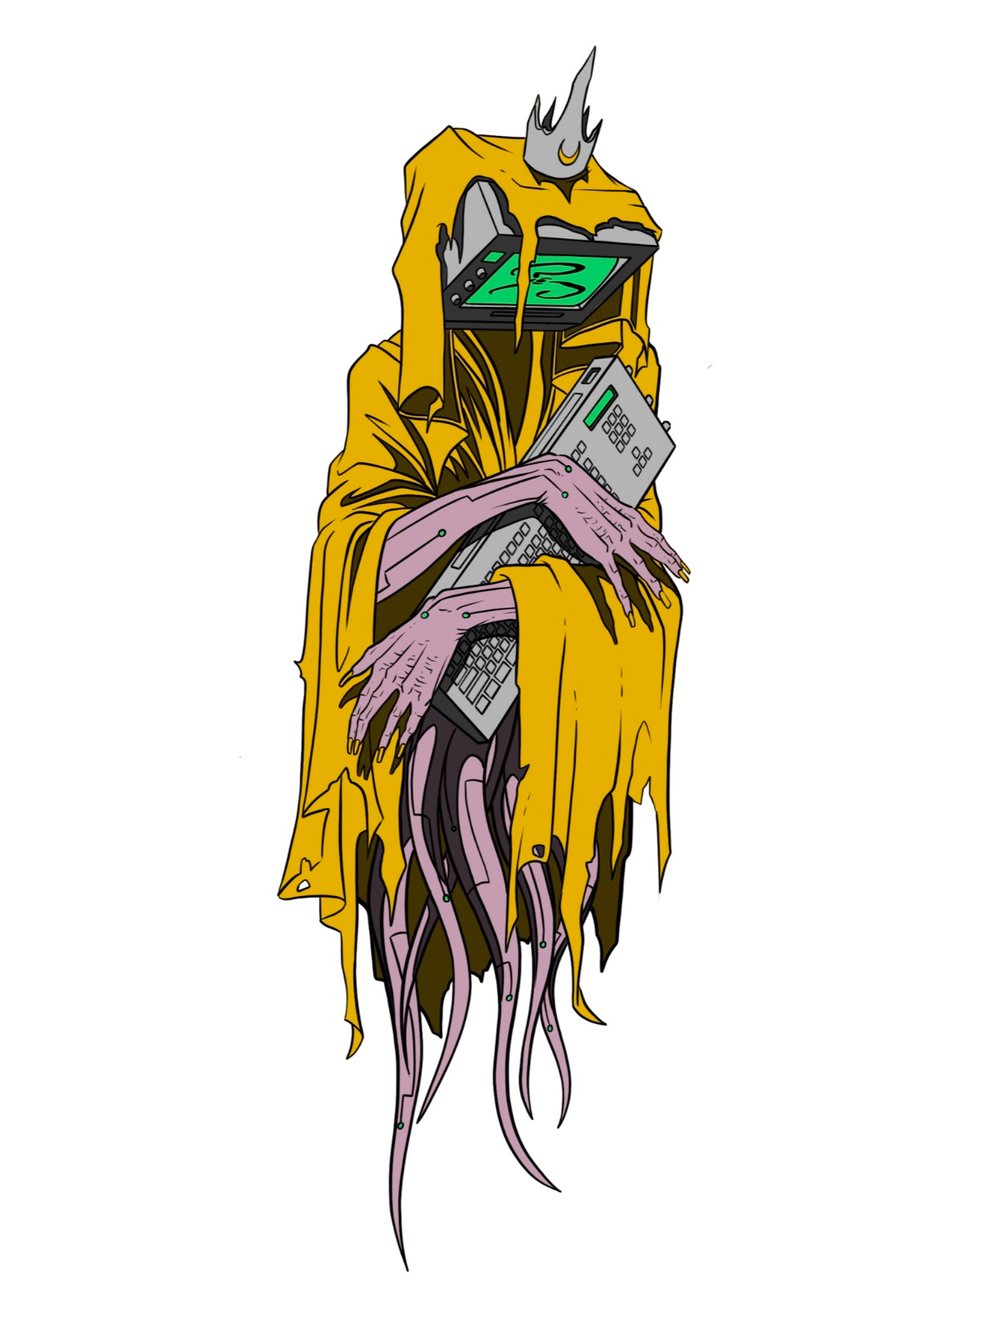 Image of The Cyber King In Yellow by Jordan Noir